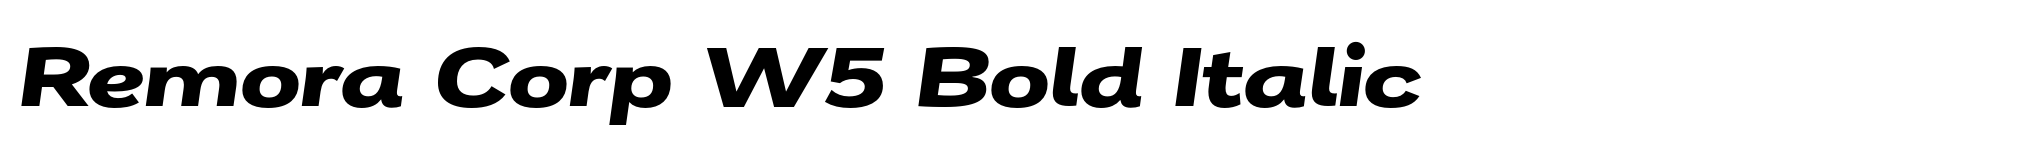 Remora Corp W5 Bold Italic image